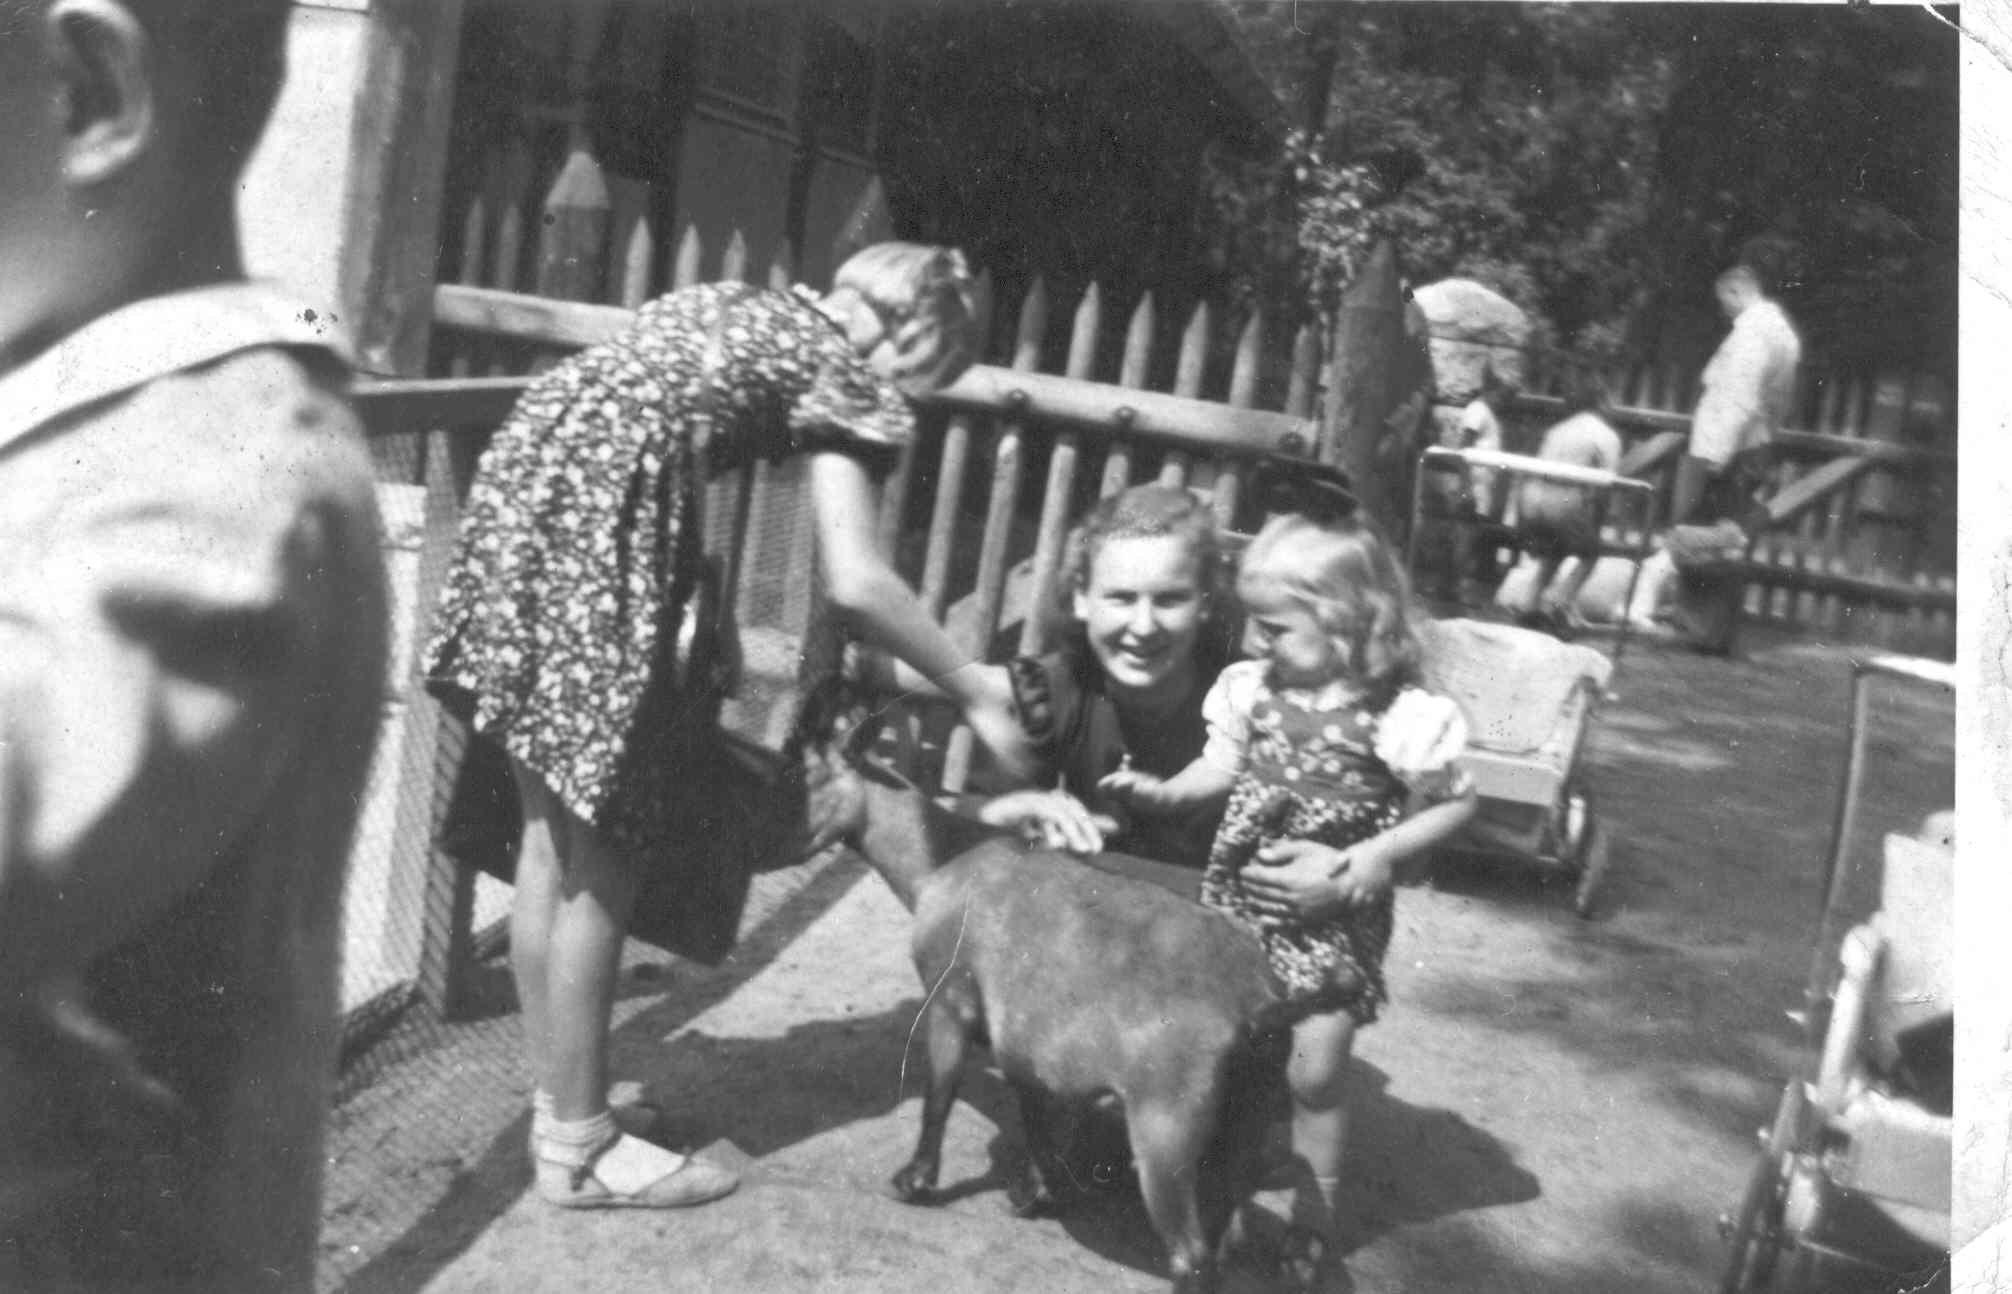  Anelese, Mom & Ingrid.
LARGE PHOTO NOT AVIALBLE